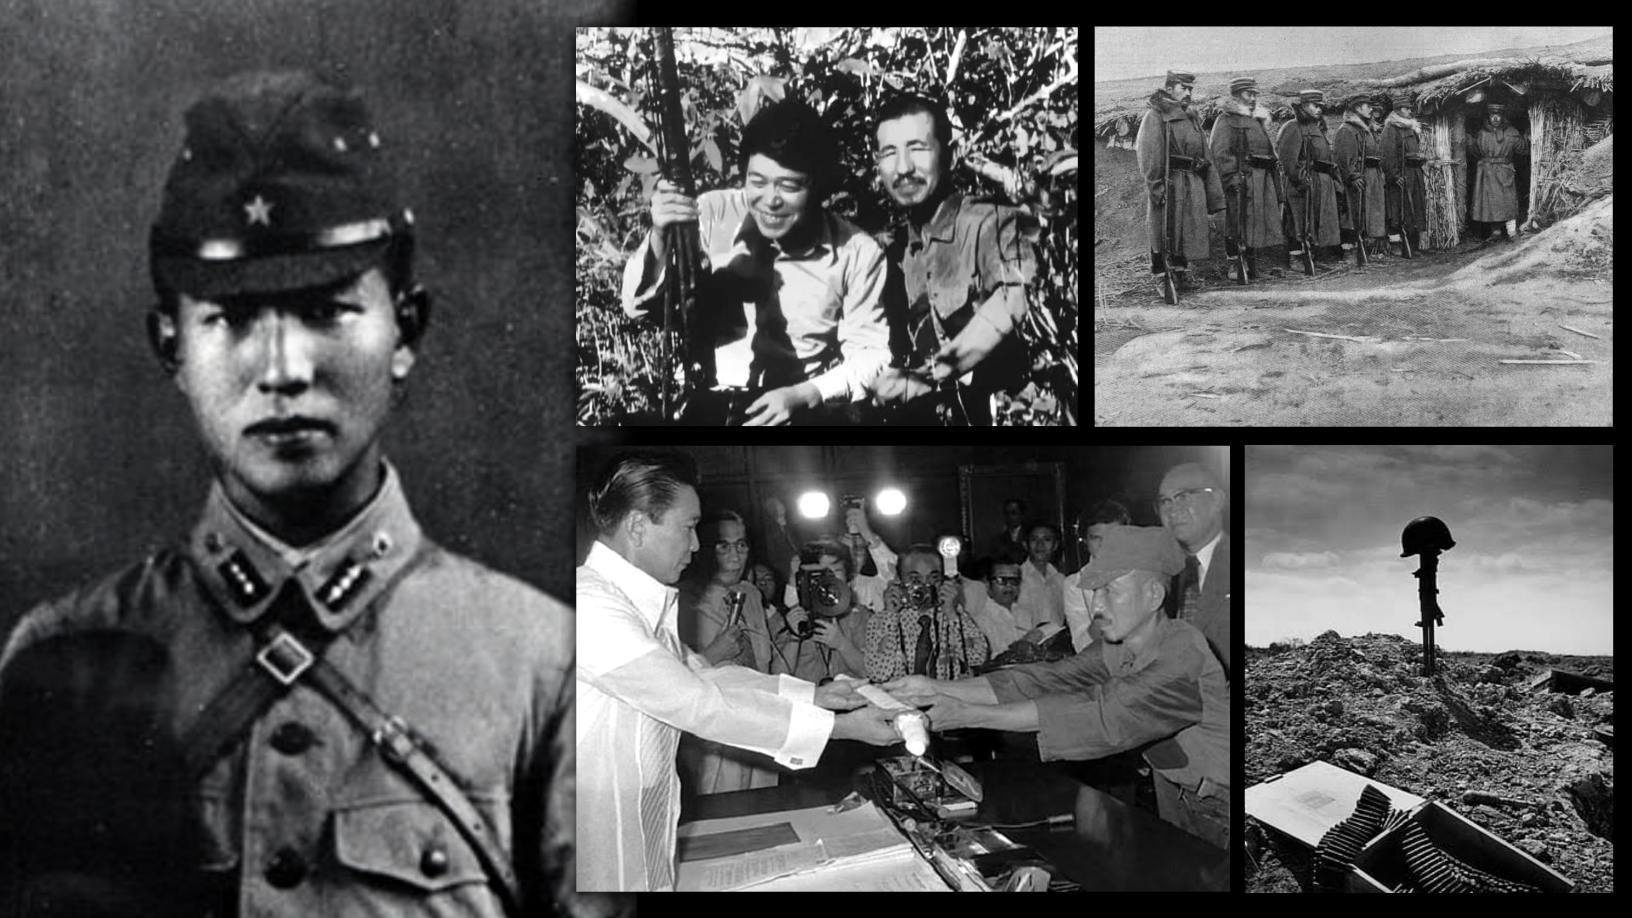 Hiroo Onoda: Ο Ιάπωνας στρατιώτης συνέχισε τον Β' Παγκόσμιο Πόλεμο χωρίς να ξέρει ότι όλα είχαν τελειώσει πριν από 29 χρόνια 1